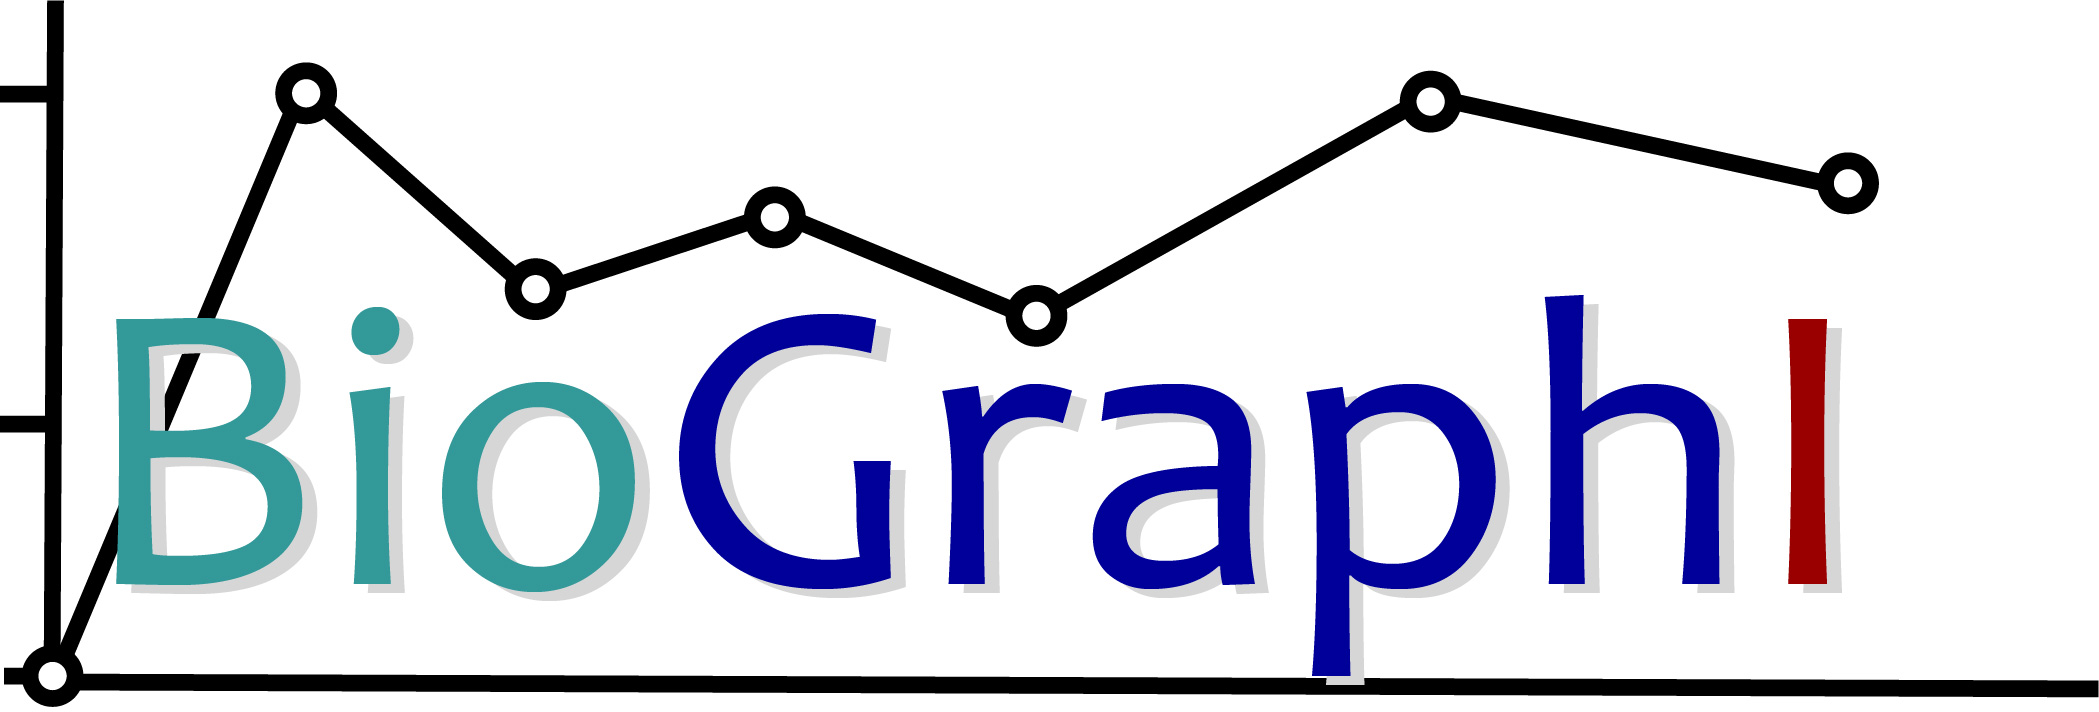 Biologists and Graph Interpretation group image